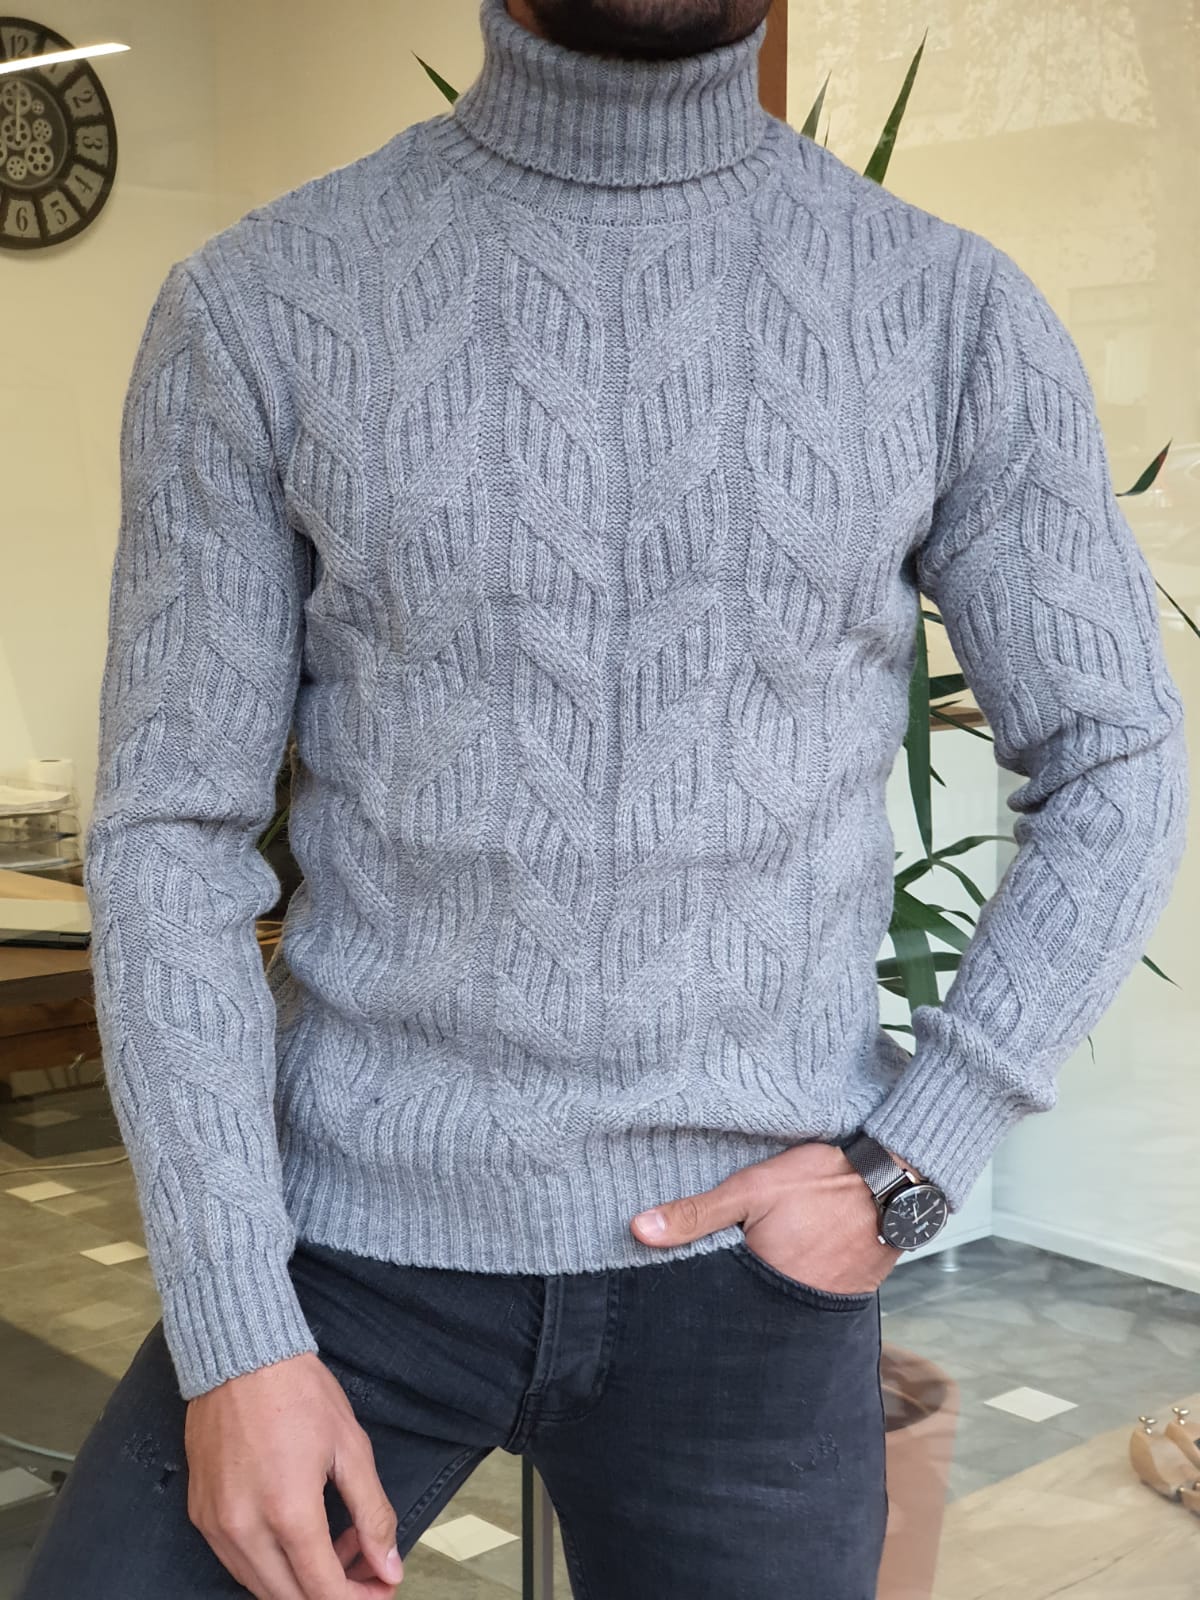 Aysoti Mooseville Gray Slim Fit Turtleneck Wool Sweater - Aysotiman